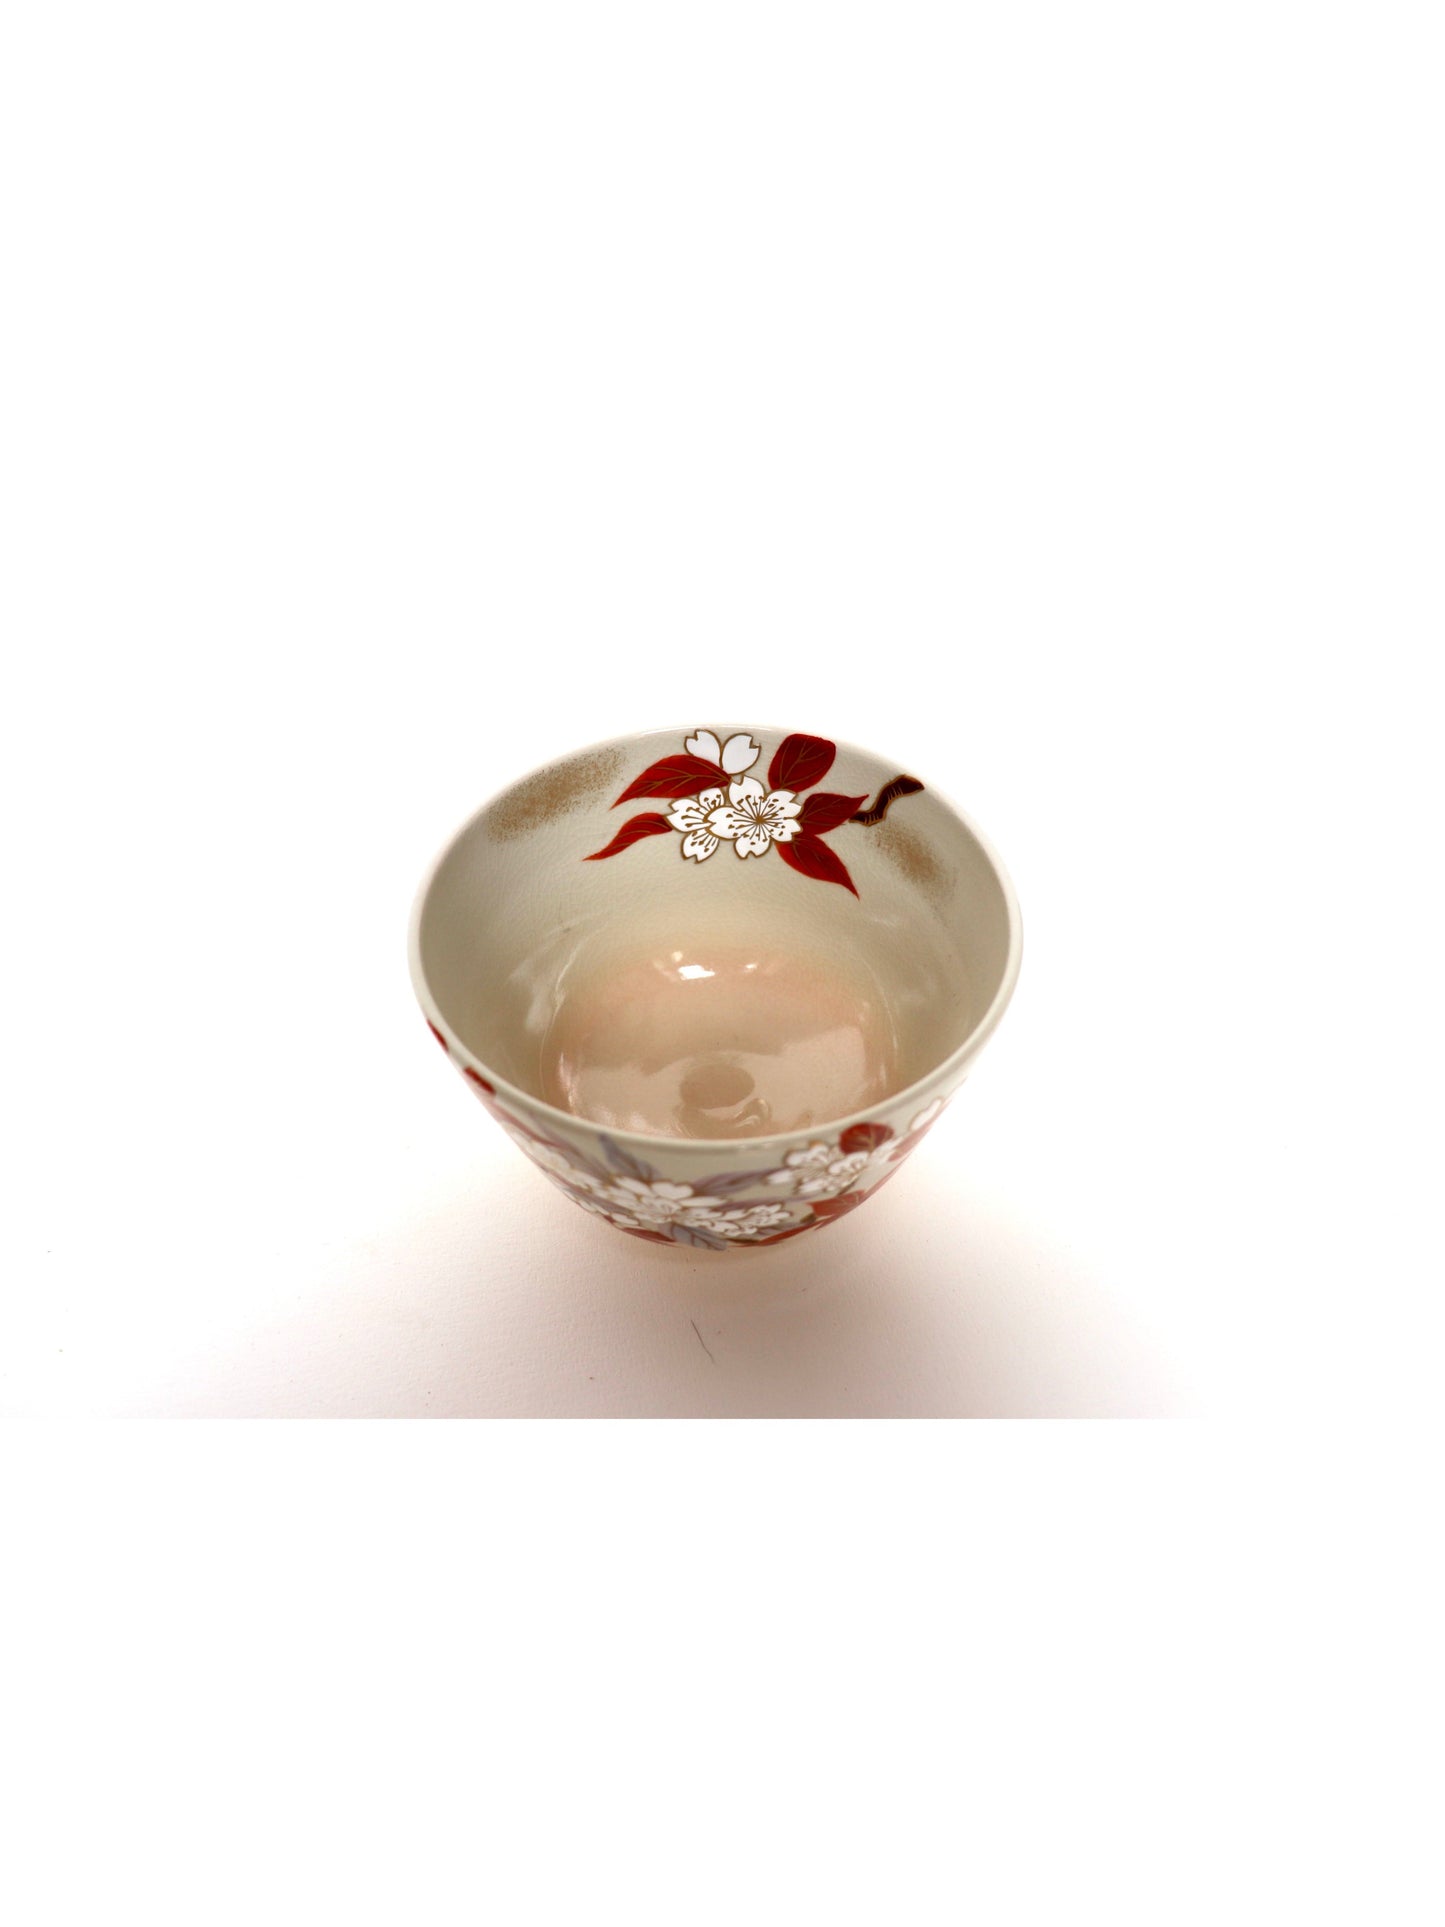 Matcha bowl / Kiyomizu-yaki "Yamazakura" Soken Suide